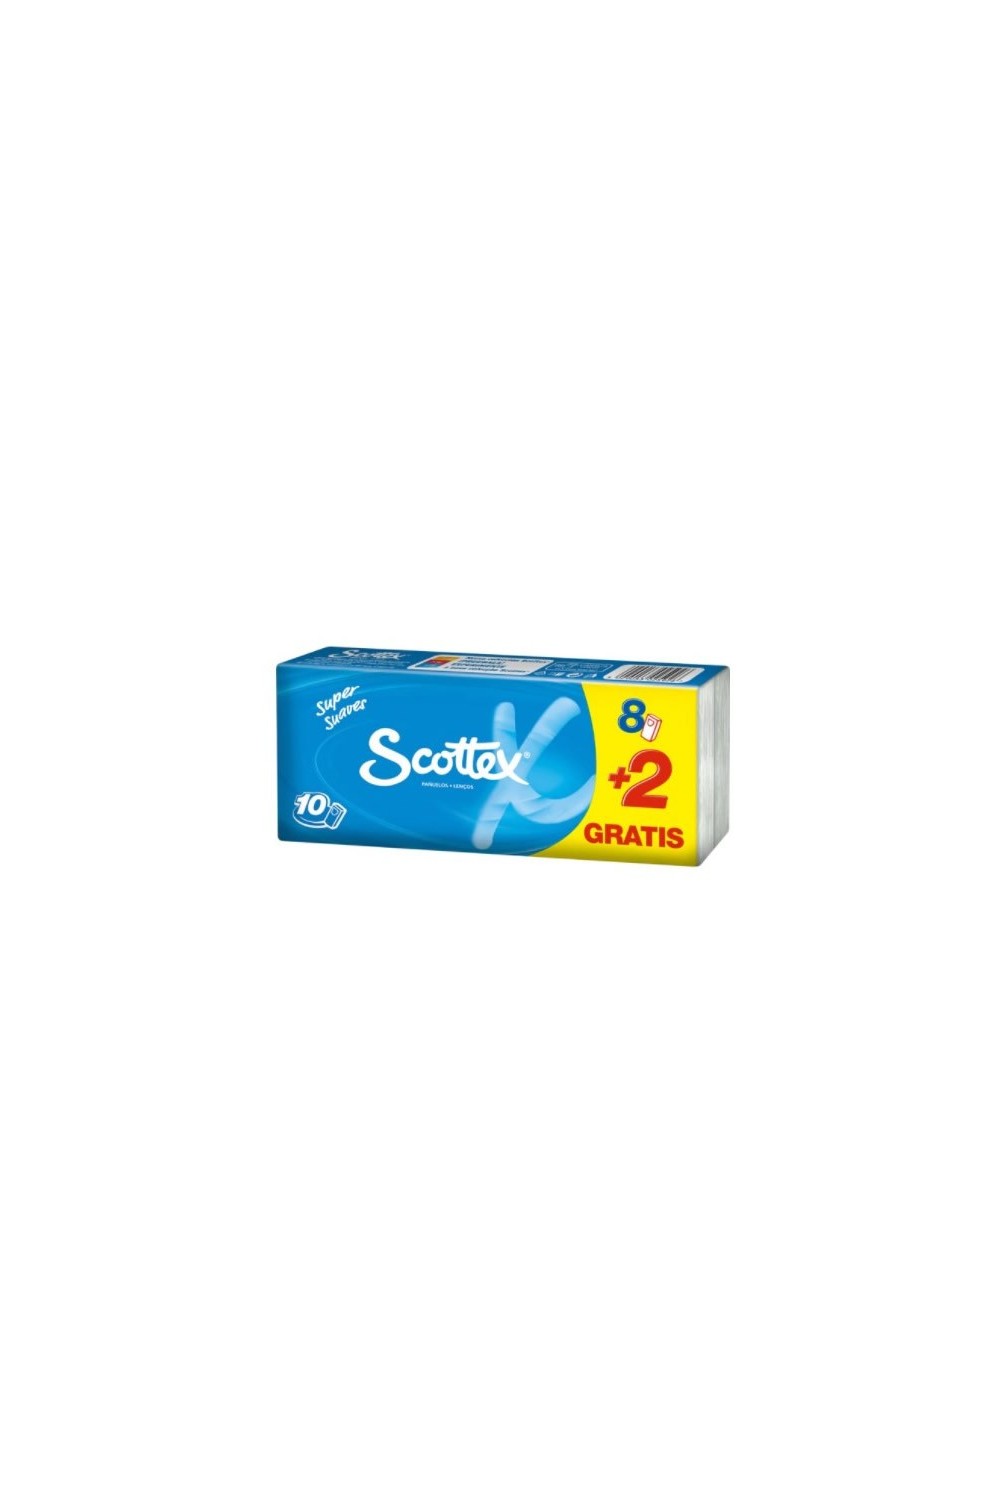 Scottex Pocket Square 3 Layers 10 Units